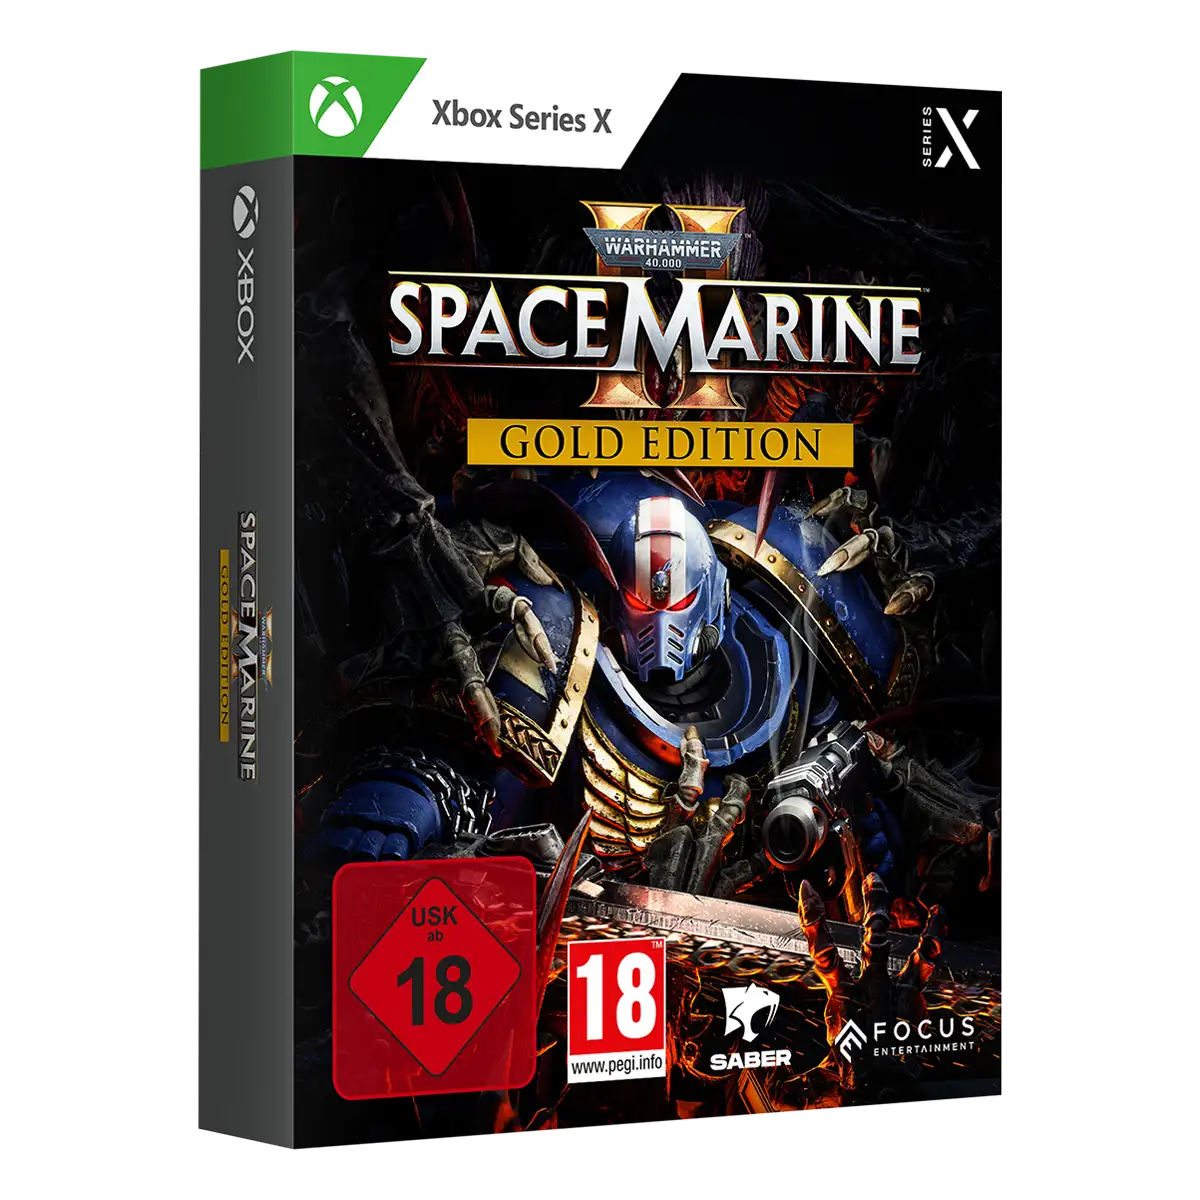 Warhammer 40,000: Space Marine 2 Gold Edition (XSRX)